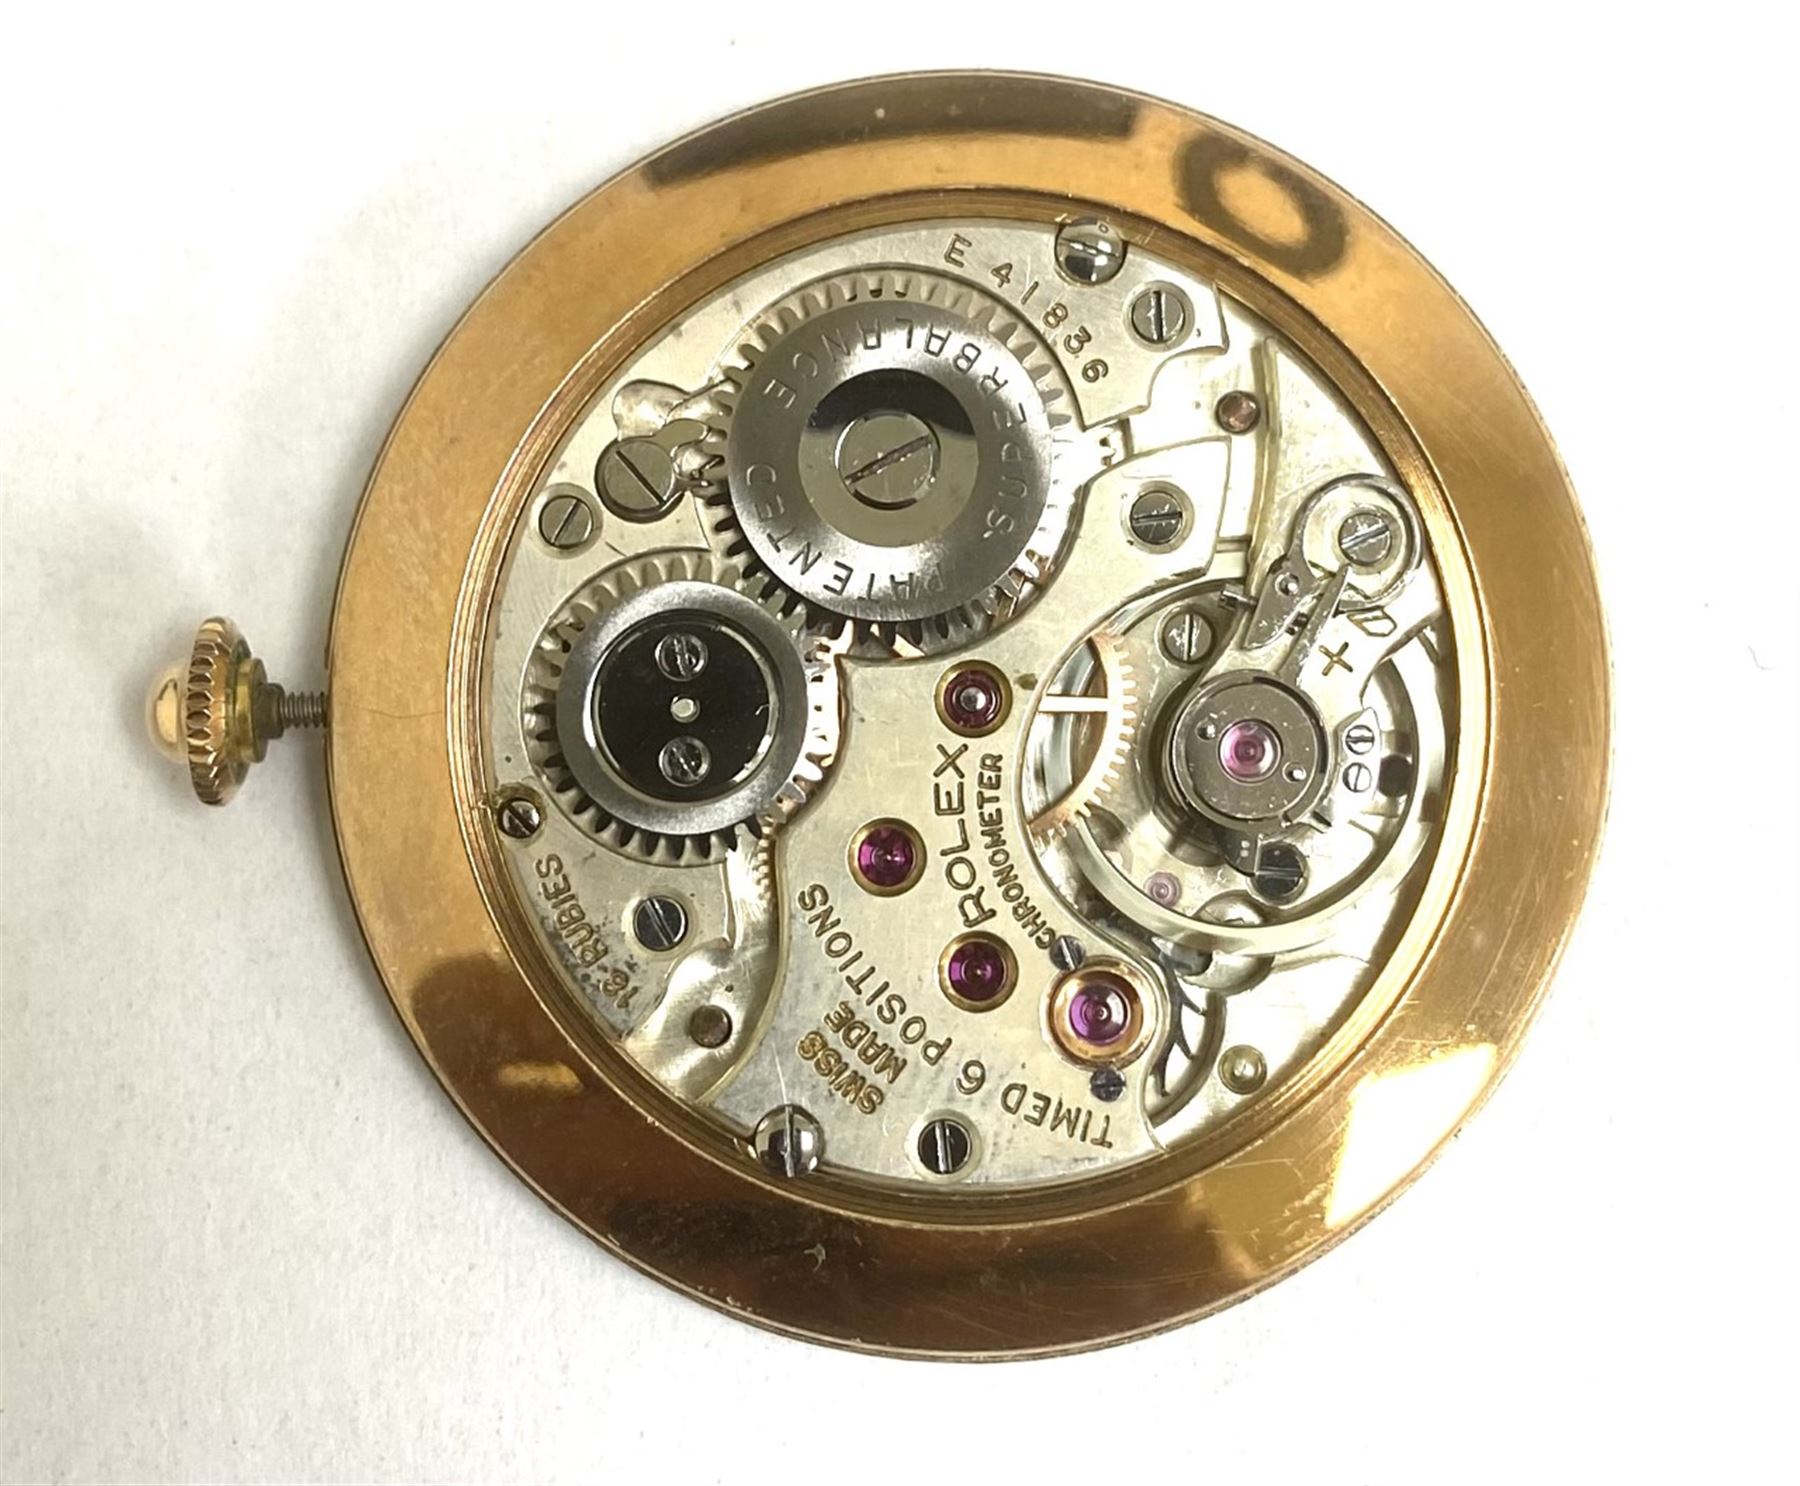 Rolex Precision Metropolitan Chronometer - Image 5 of 8